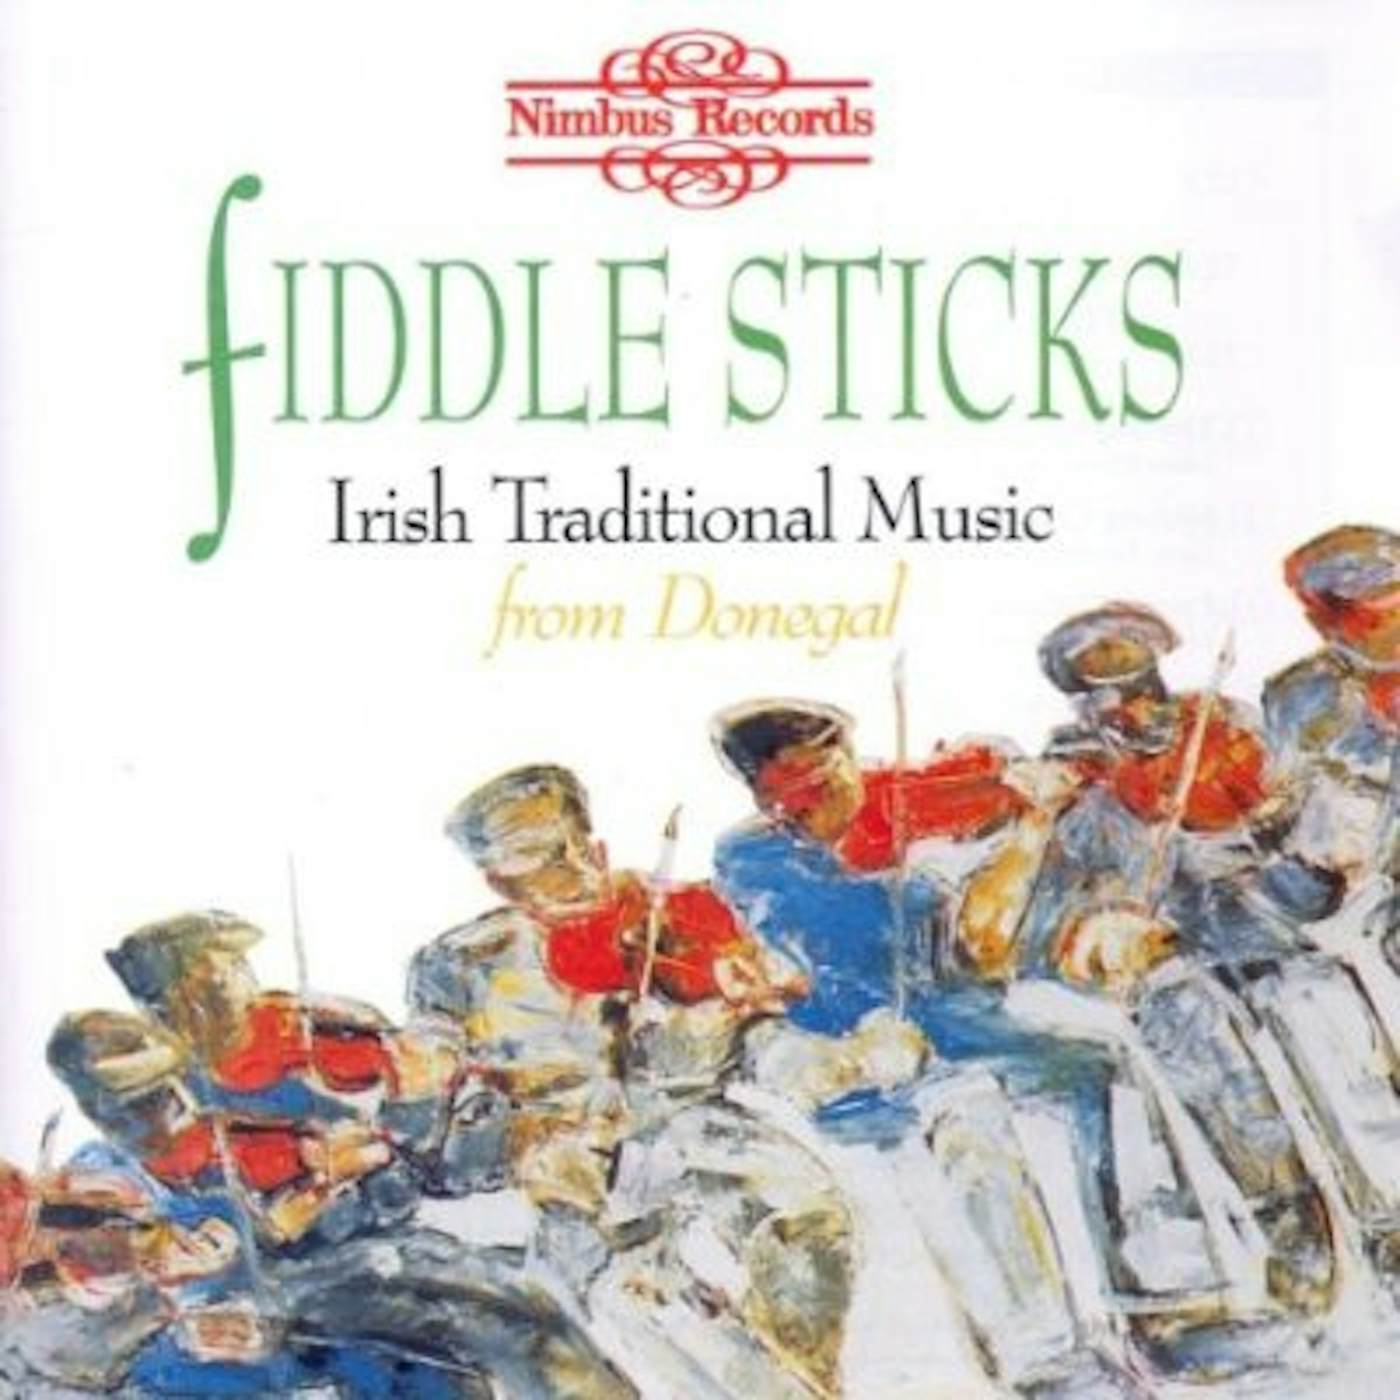 Fiddlesticks IRISH TRADITIONAL MUSIC CD